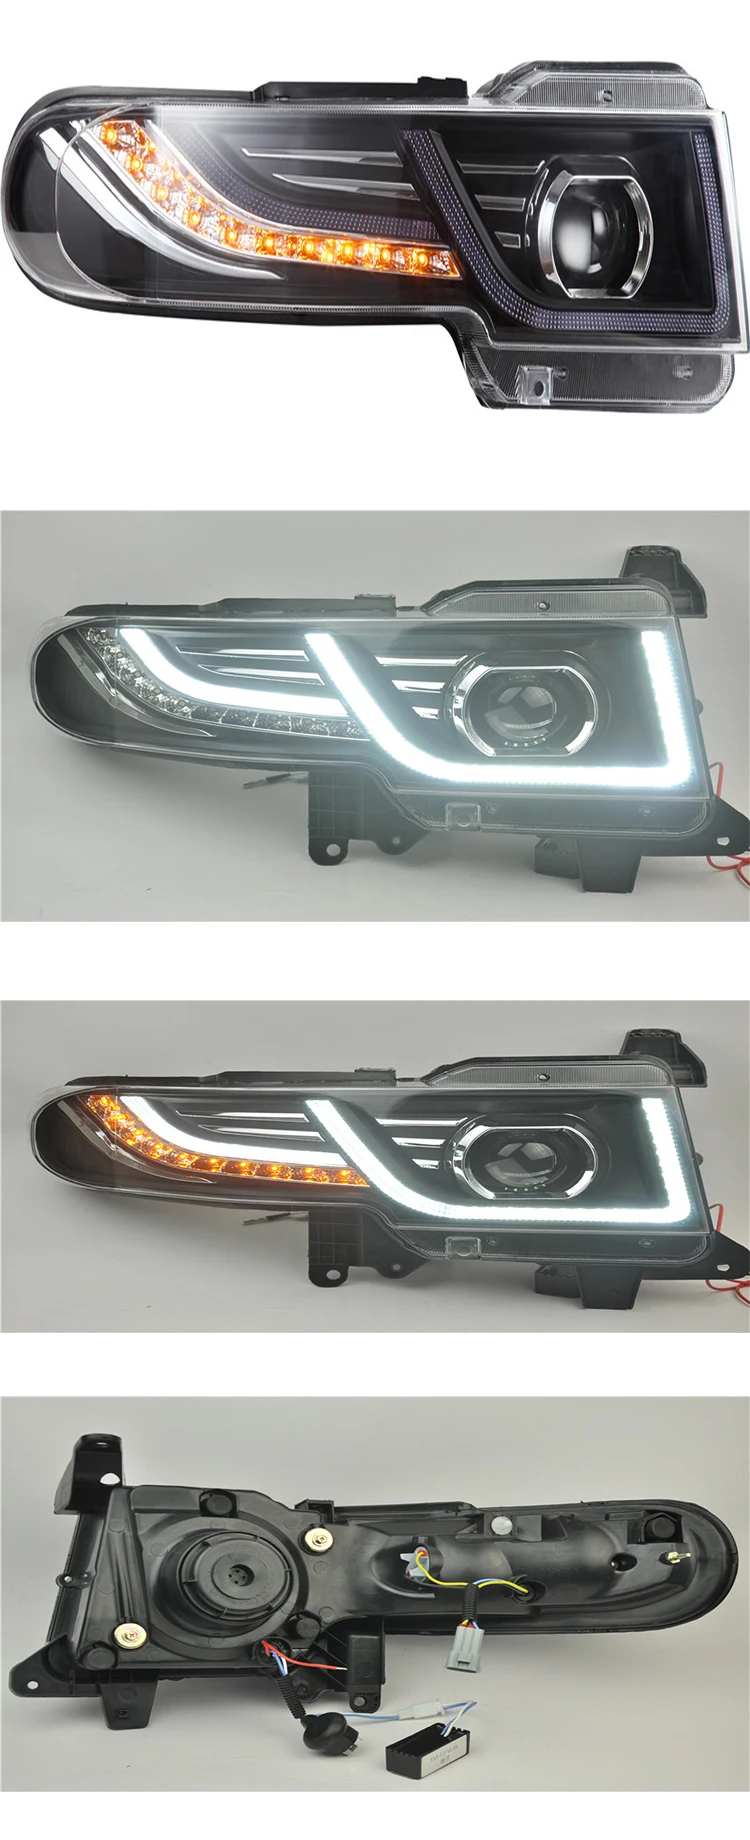 Vland factory for Car lamp for Cruiser FJ headlight 2007 2006 2010 2018 2017 for FJ Cruiser LED head lamp with Grille